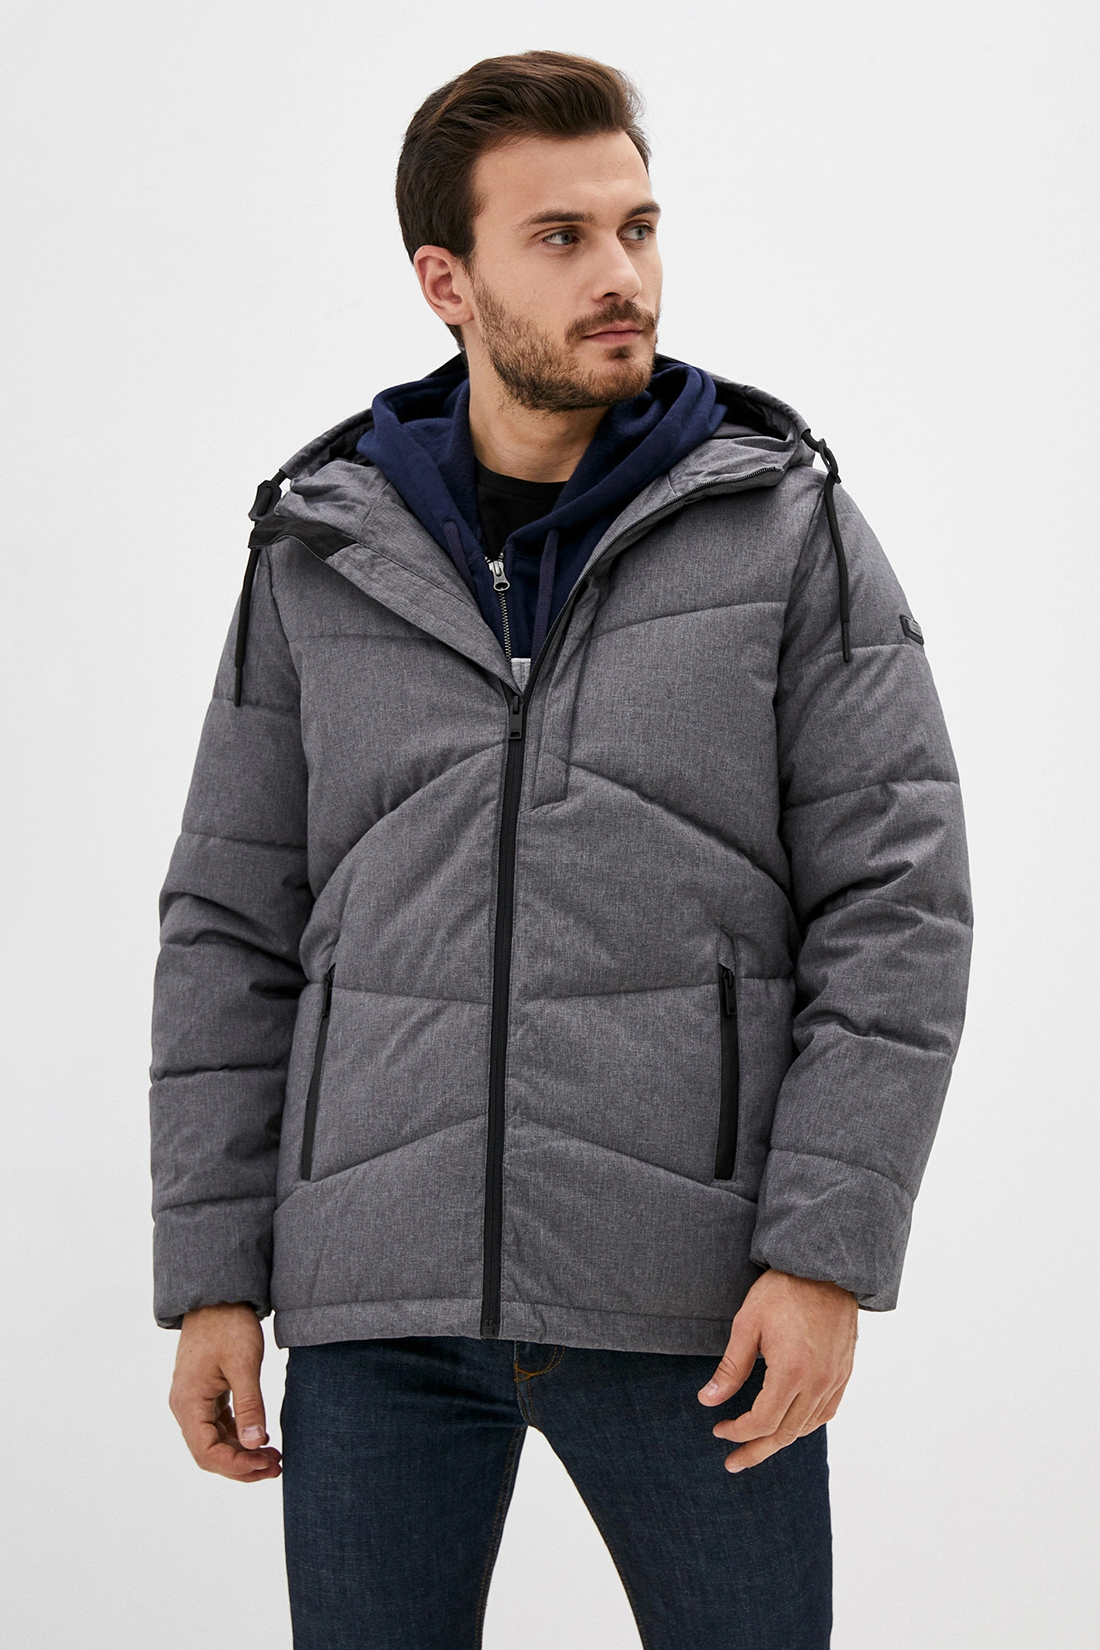 Куртка (Эко пух) (арт. baon B540508), размер XL, цвет deep grey melange#серый Куртка (Эко пух) (арт. baon B540508) - фото 1